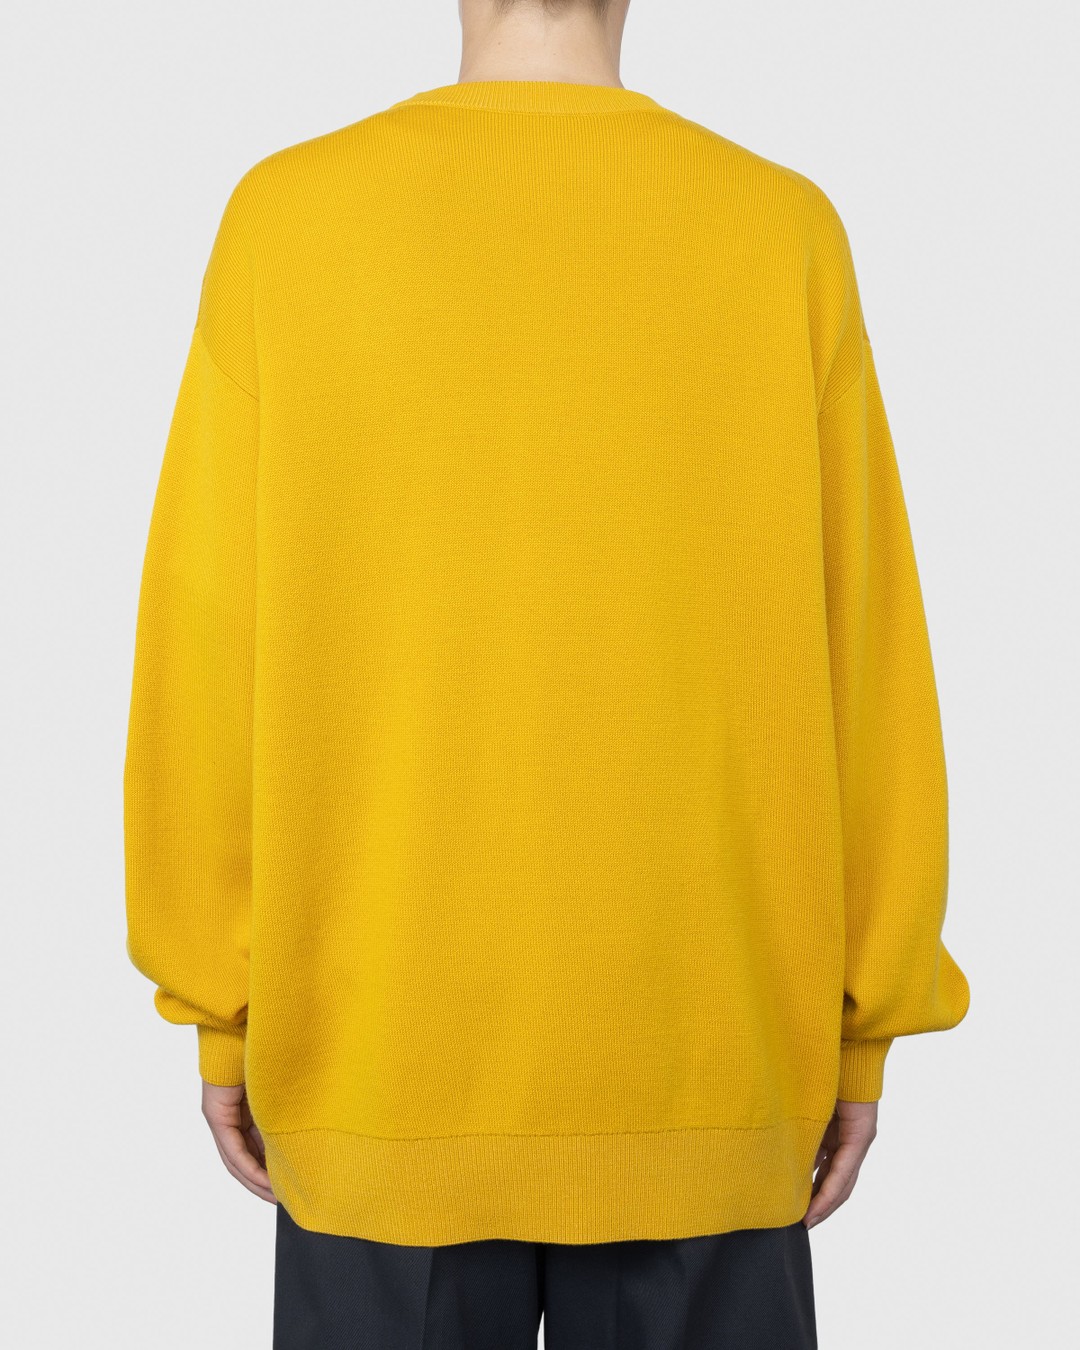 Acne Studios – Merino Wool Crewneck Sweater Yellow - Crewnecks - Yellow - Image 4